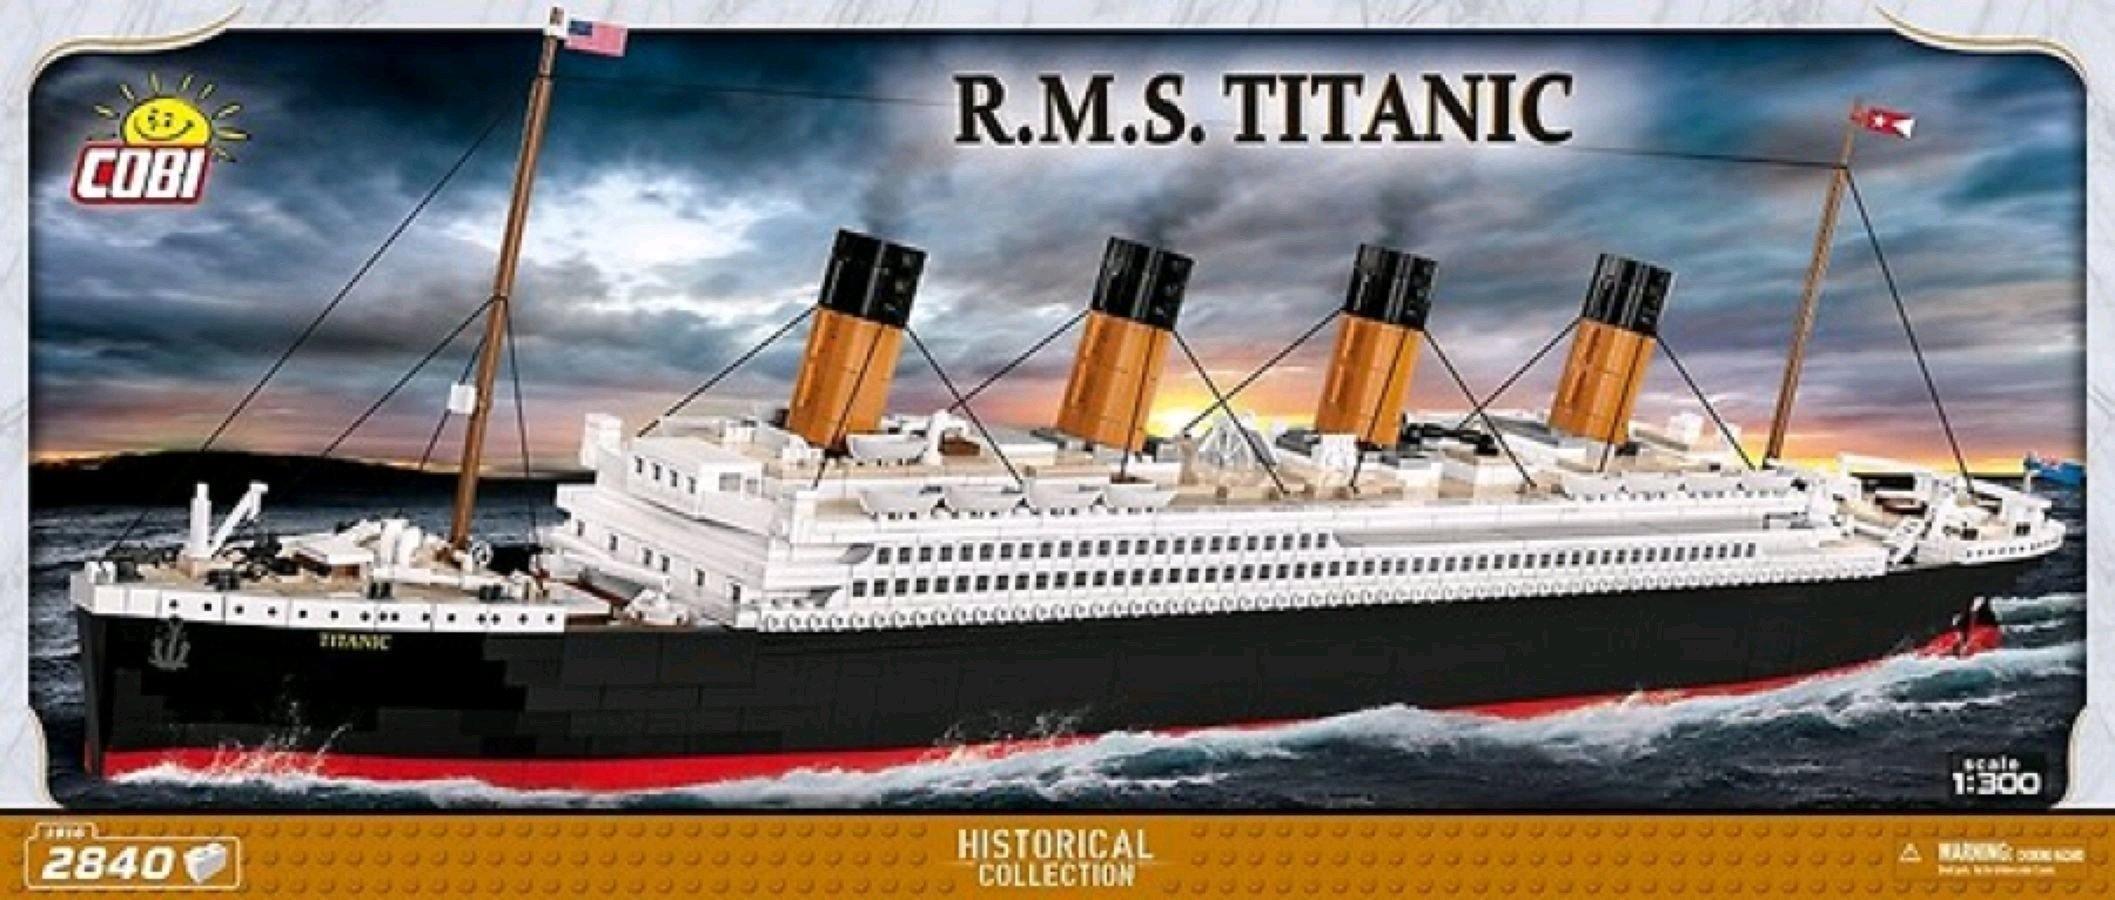 COB1916 Titanic - R.M.S. Titanic 1:300 scale 2840 piece Construction Set - Cobi - Titan Pop Culture